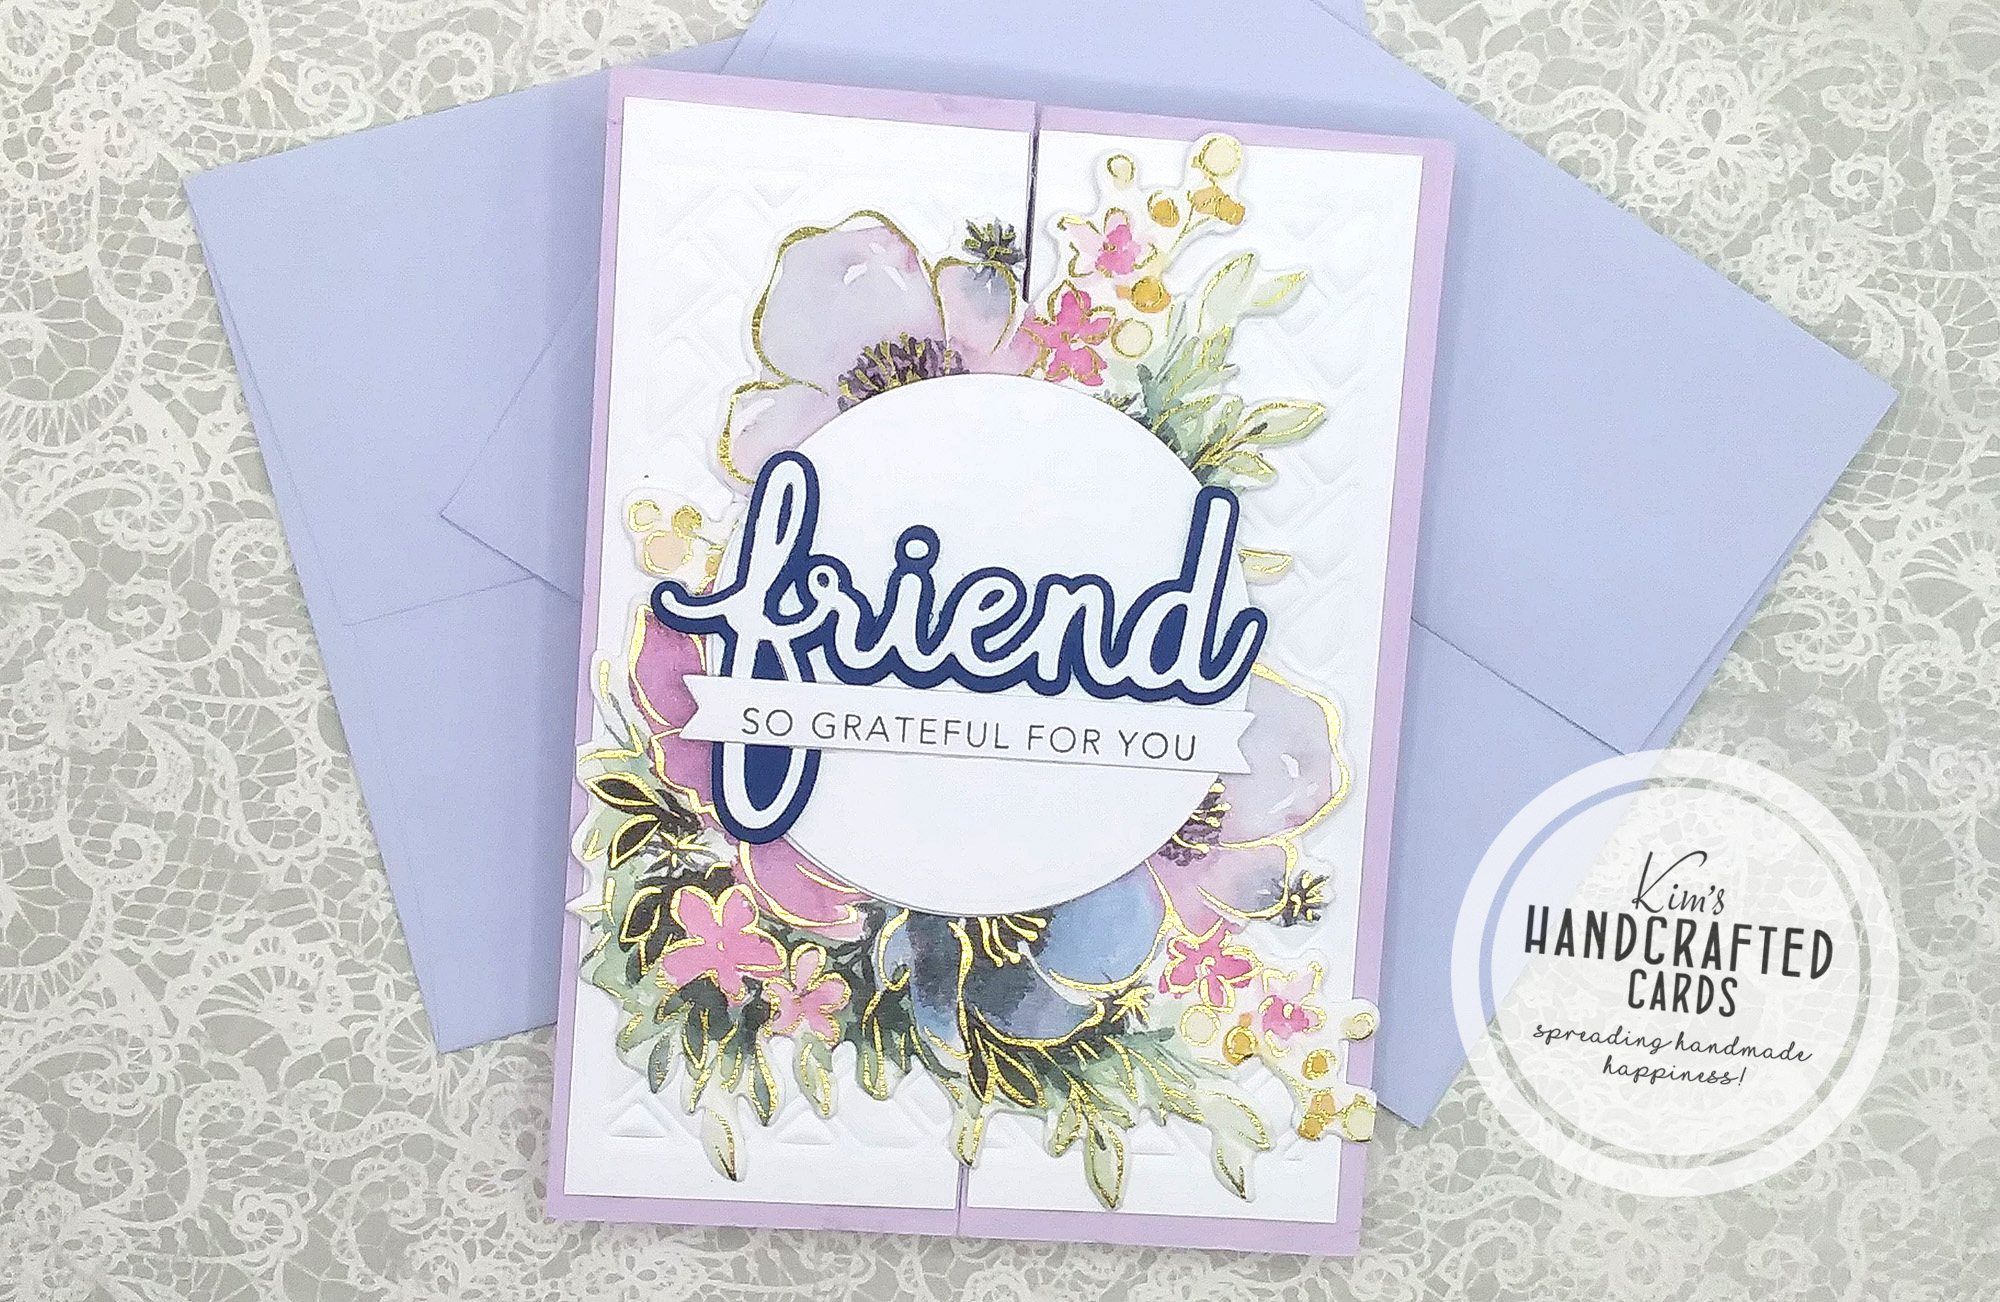 Friendship Cards with a Fun Twist